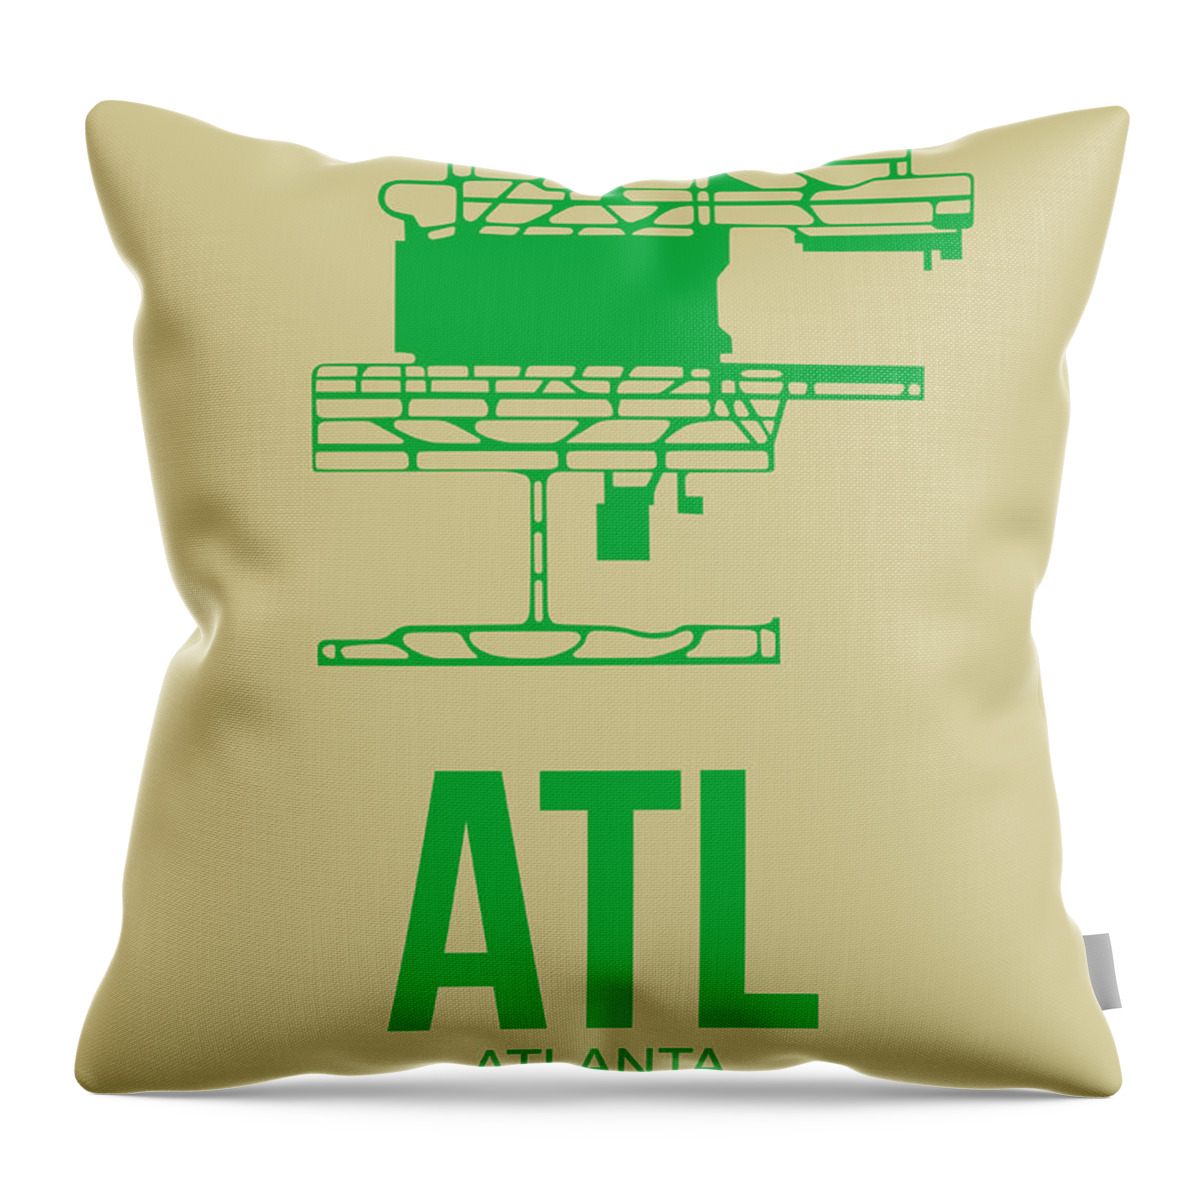 Atlanta Throw Pillow featuring the digital art ATL Atlanta Airport Poster 1 by Naxart Studio